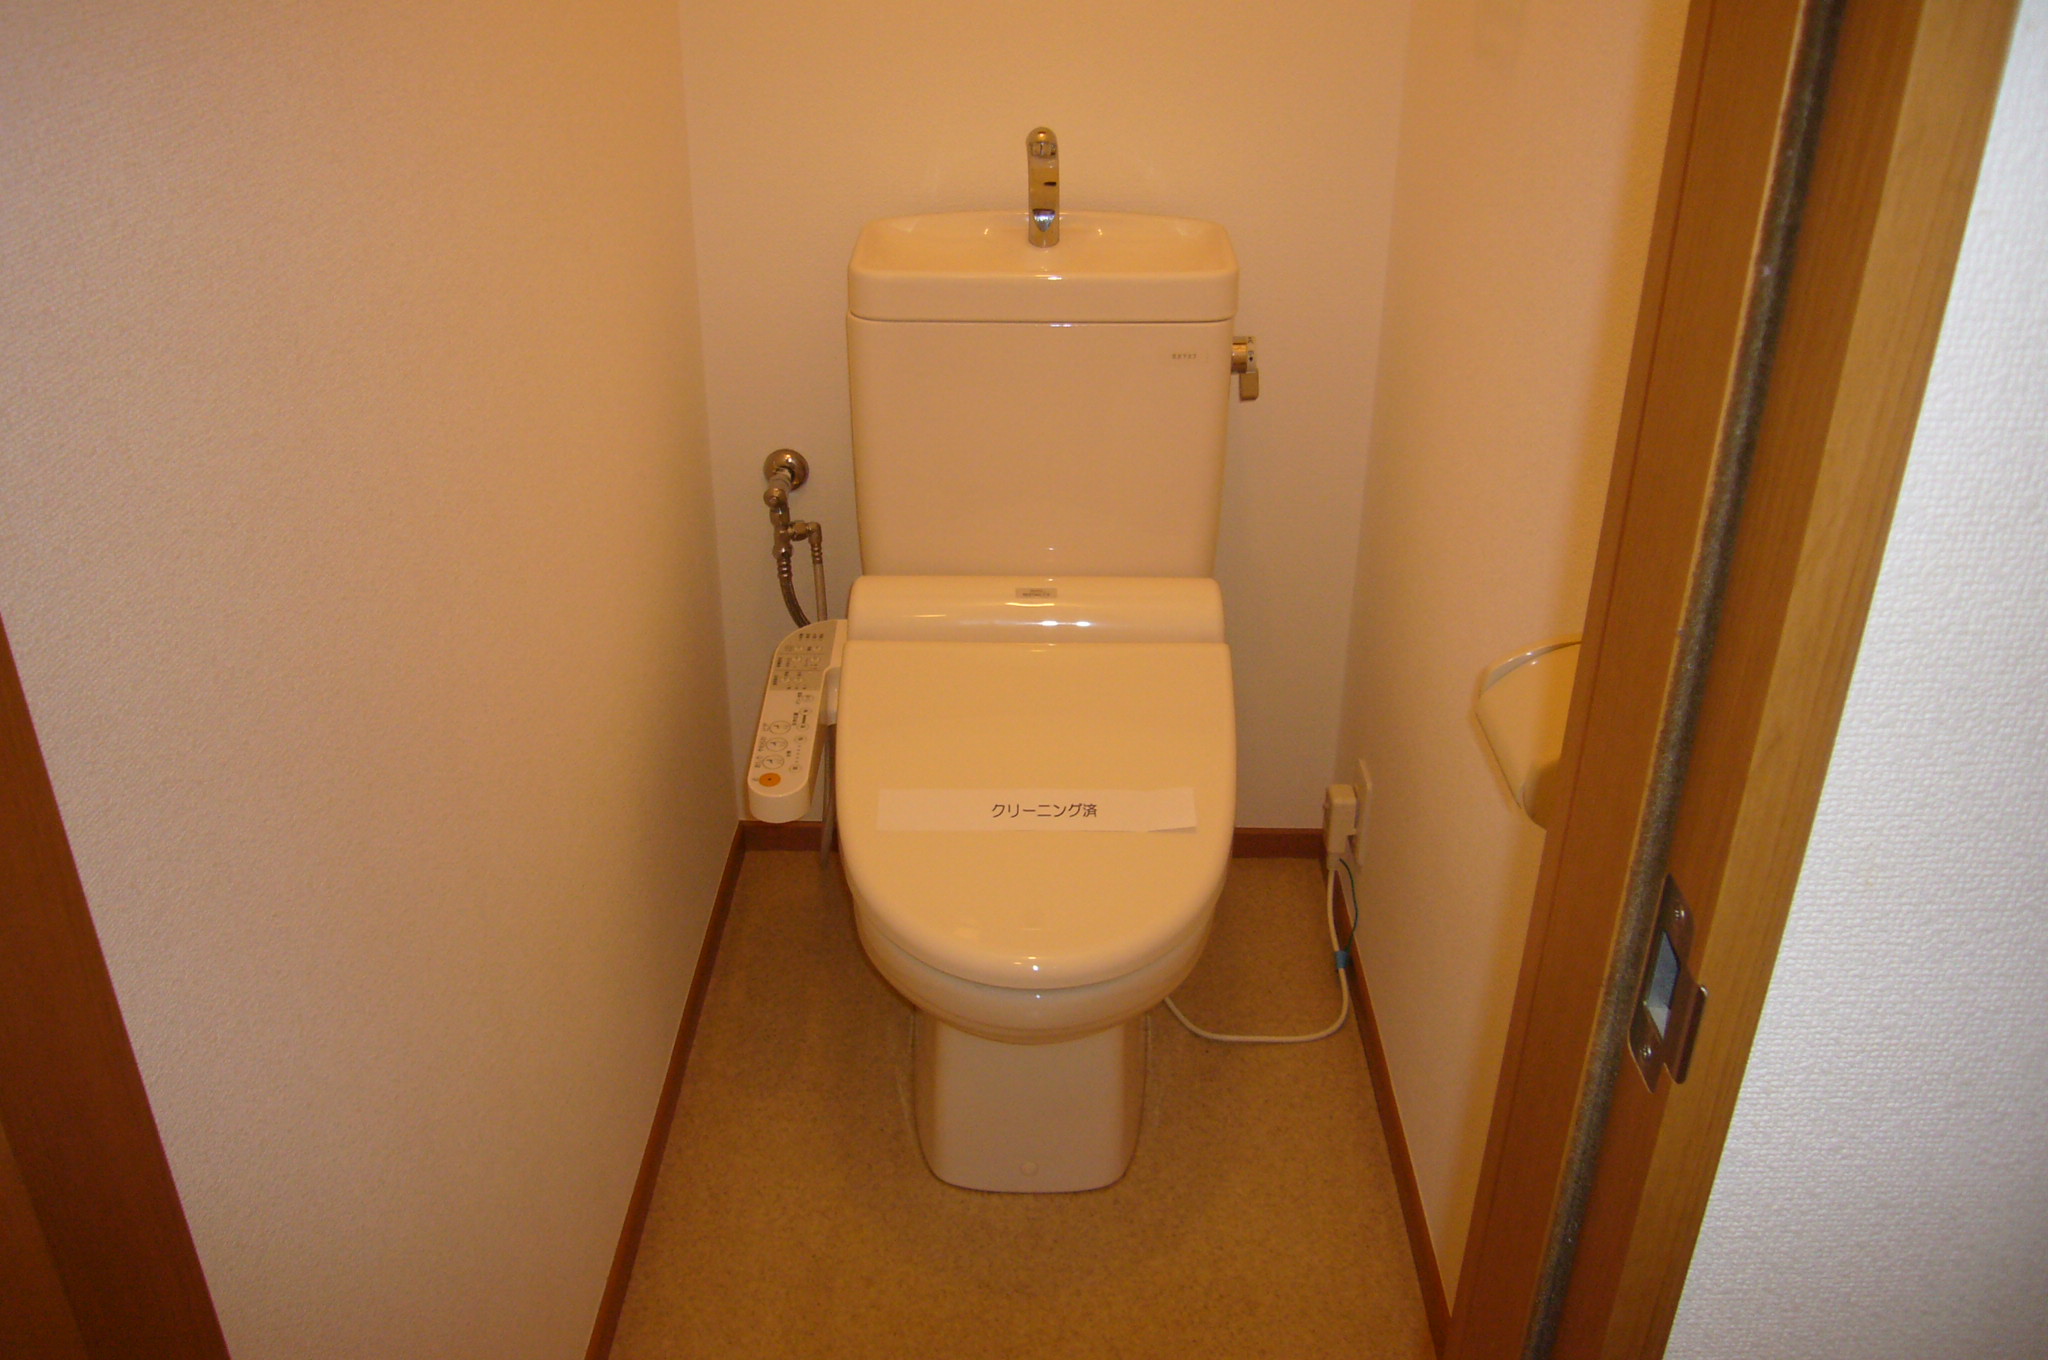 Toilet. 2013 October, Newly established